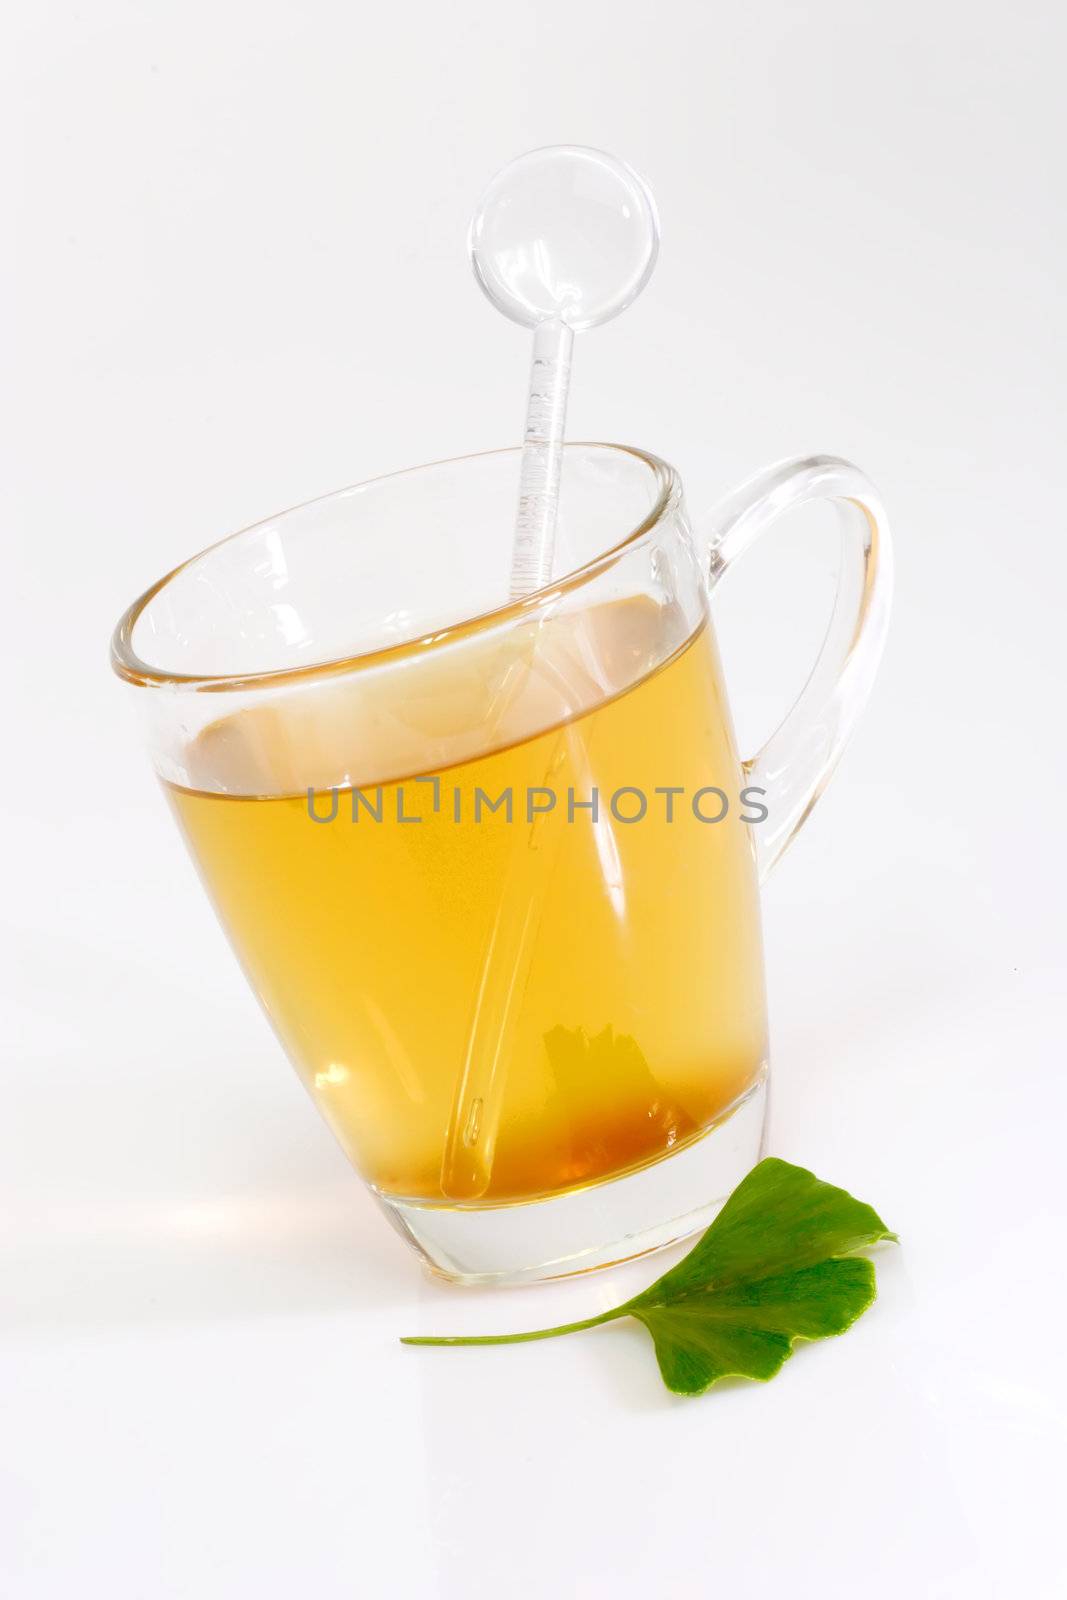 Fresh Ginkgo Biloba leaf with a glass of tea.